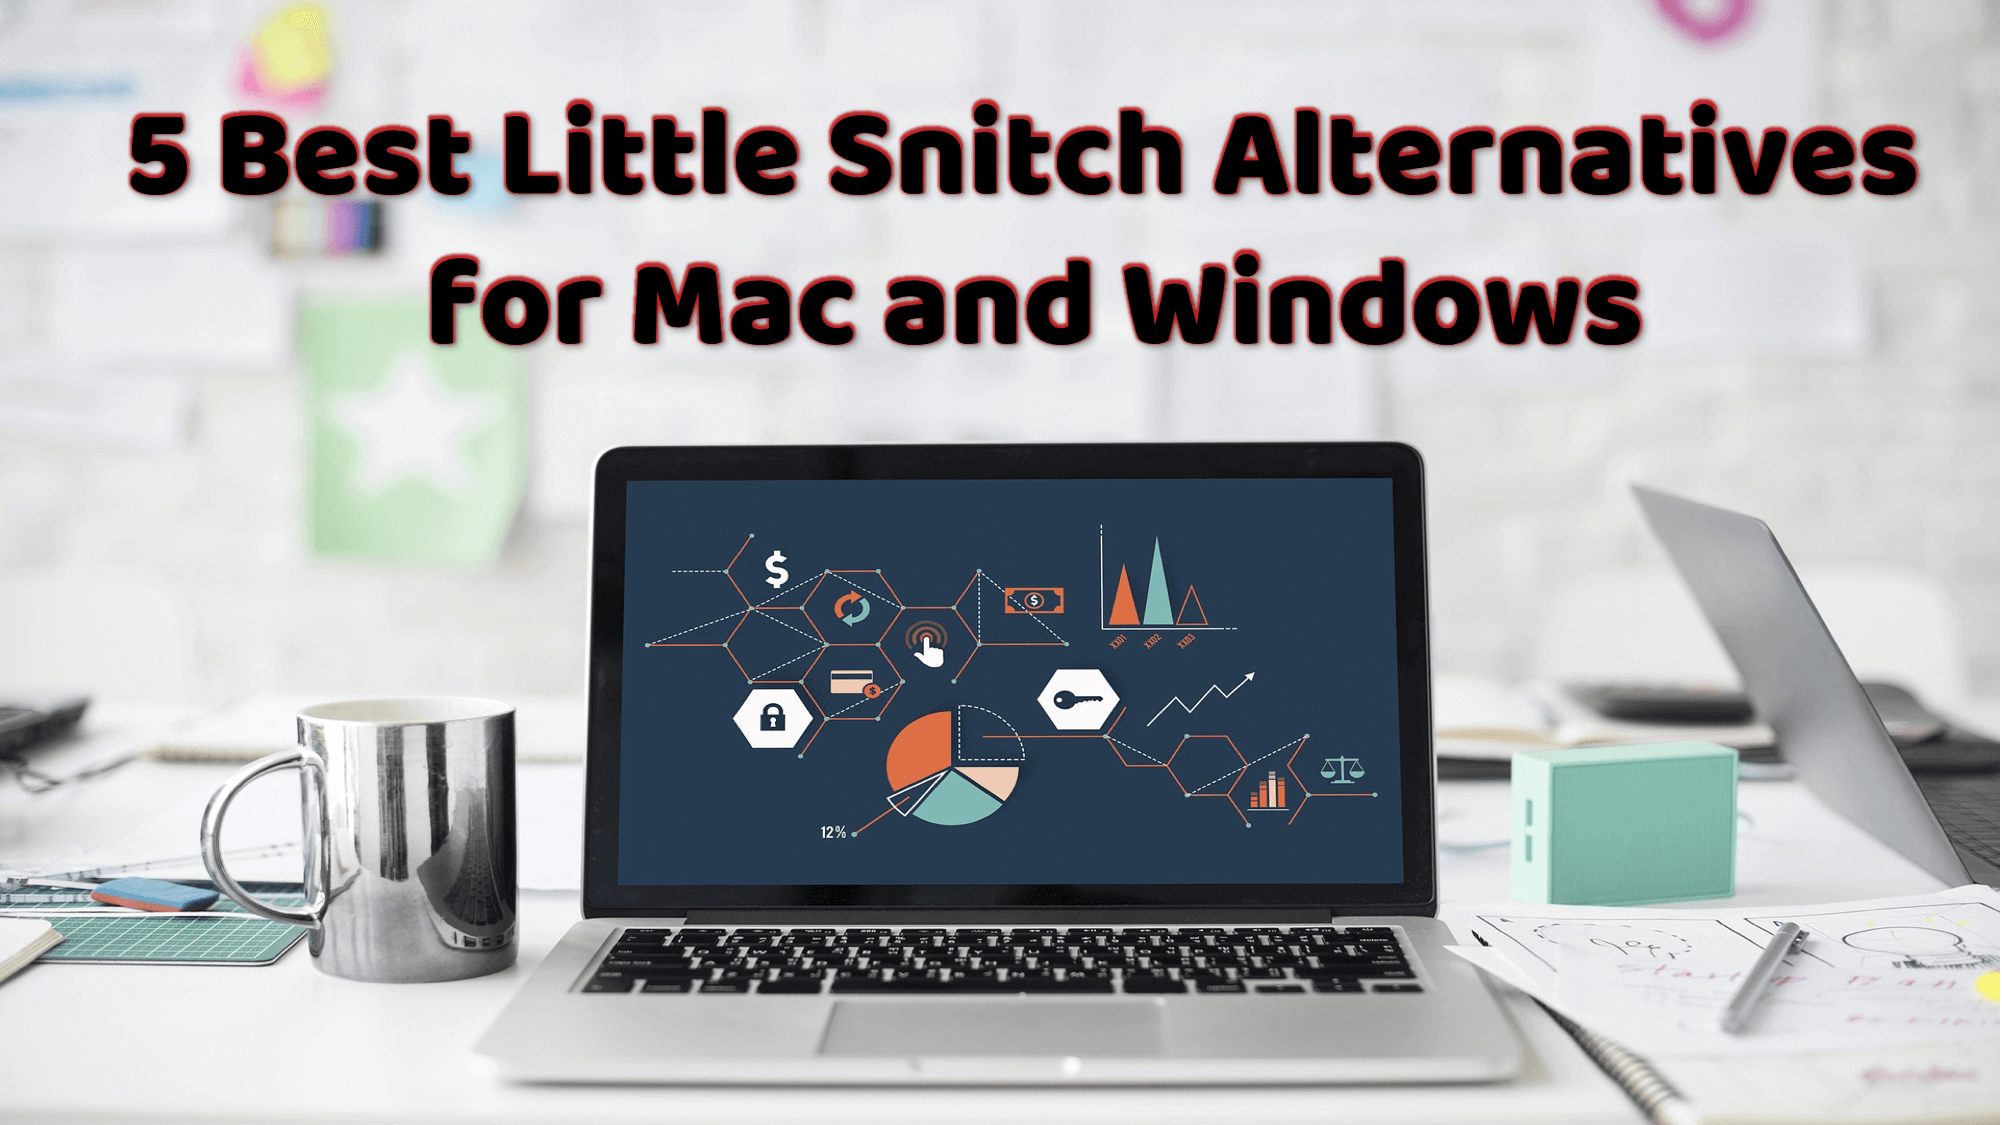 Little snitch alternative kostenlos mac